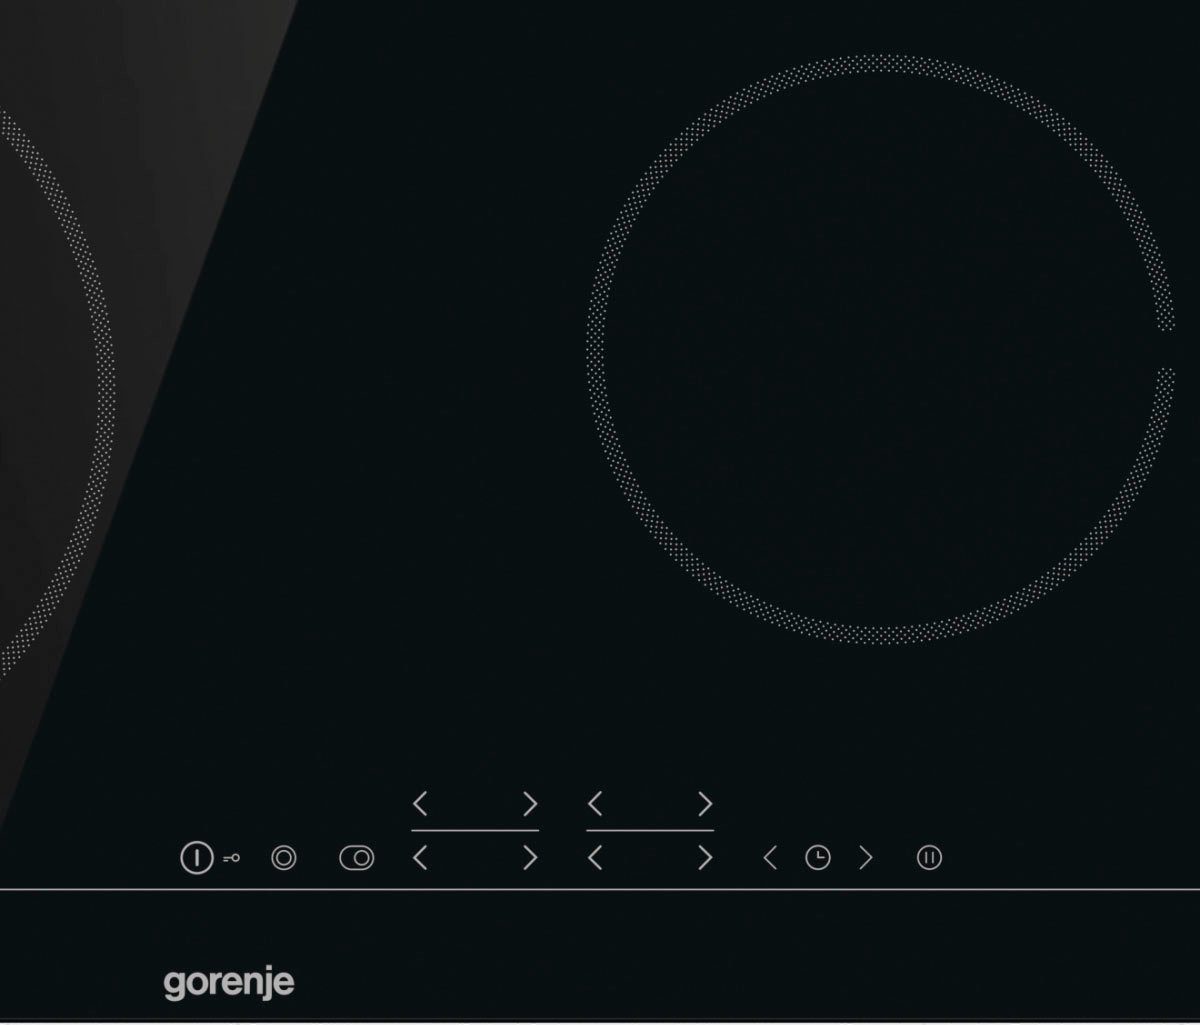 GORENJE Backofen-Set Black Aqua Clean, ExtraSteam Basic Set, mit 1-fach-Teleskopauszug, Pacific